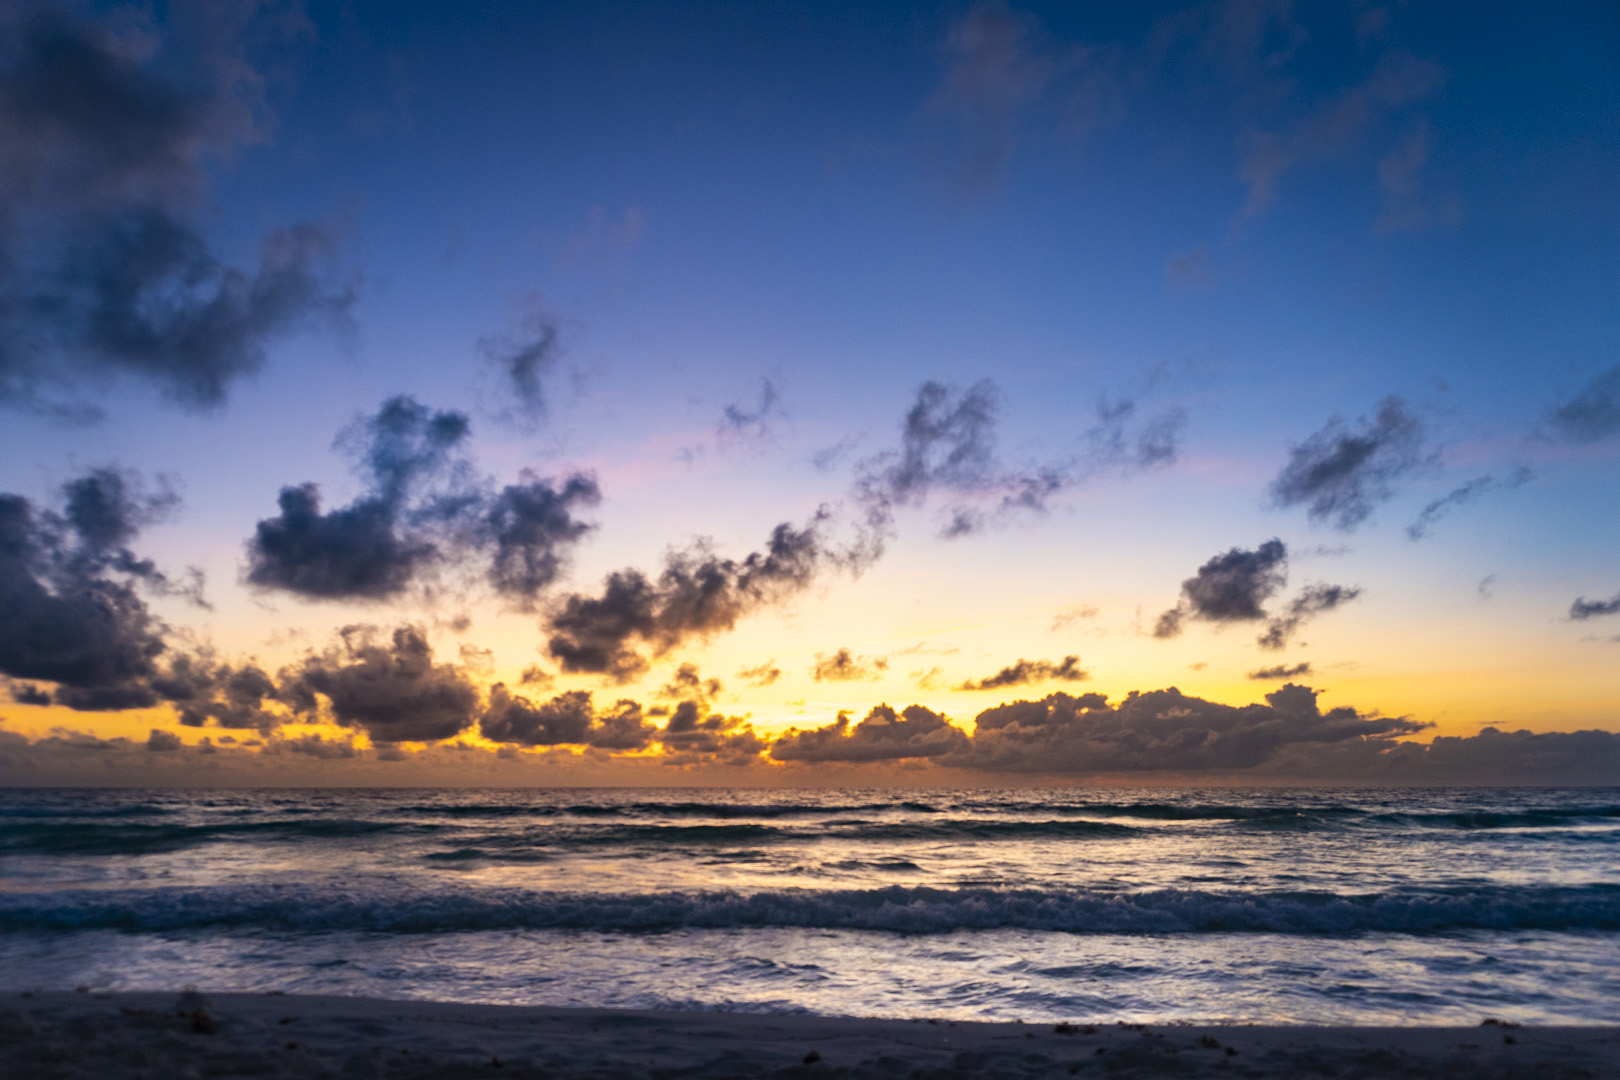 See the sunrise in Marlin Beach